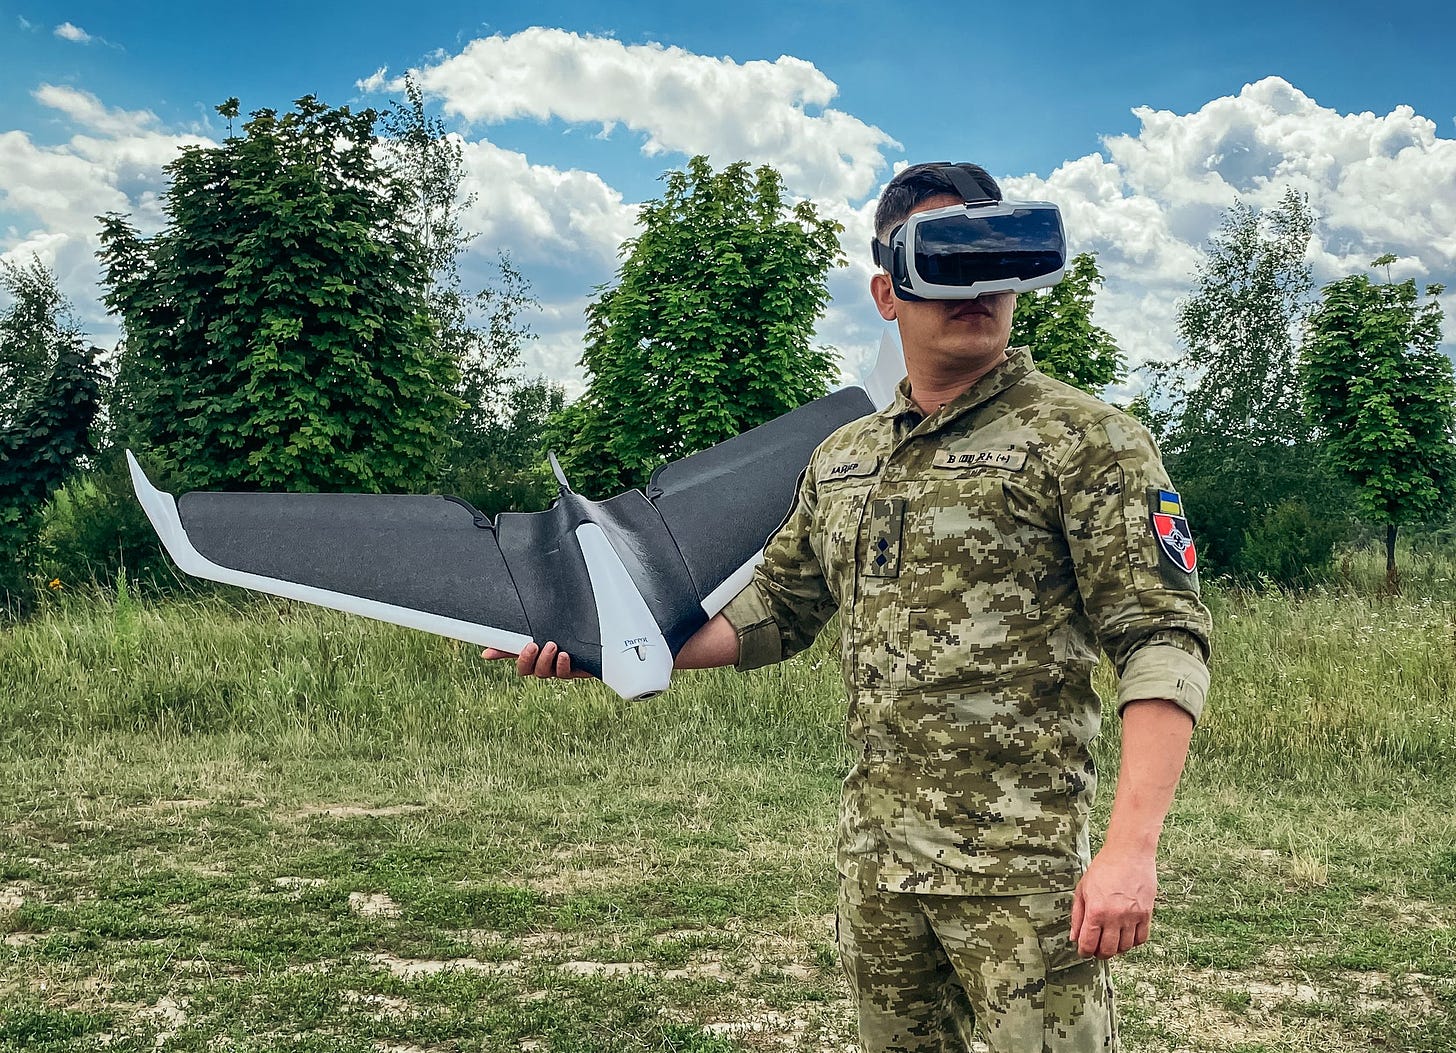 https://d.newsweek.com/en/full/2081295/ukraine-soldier-during-drone-test-kyiv-russia.jpg